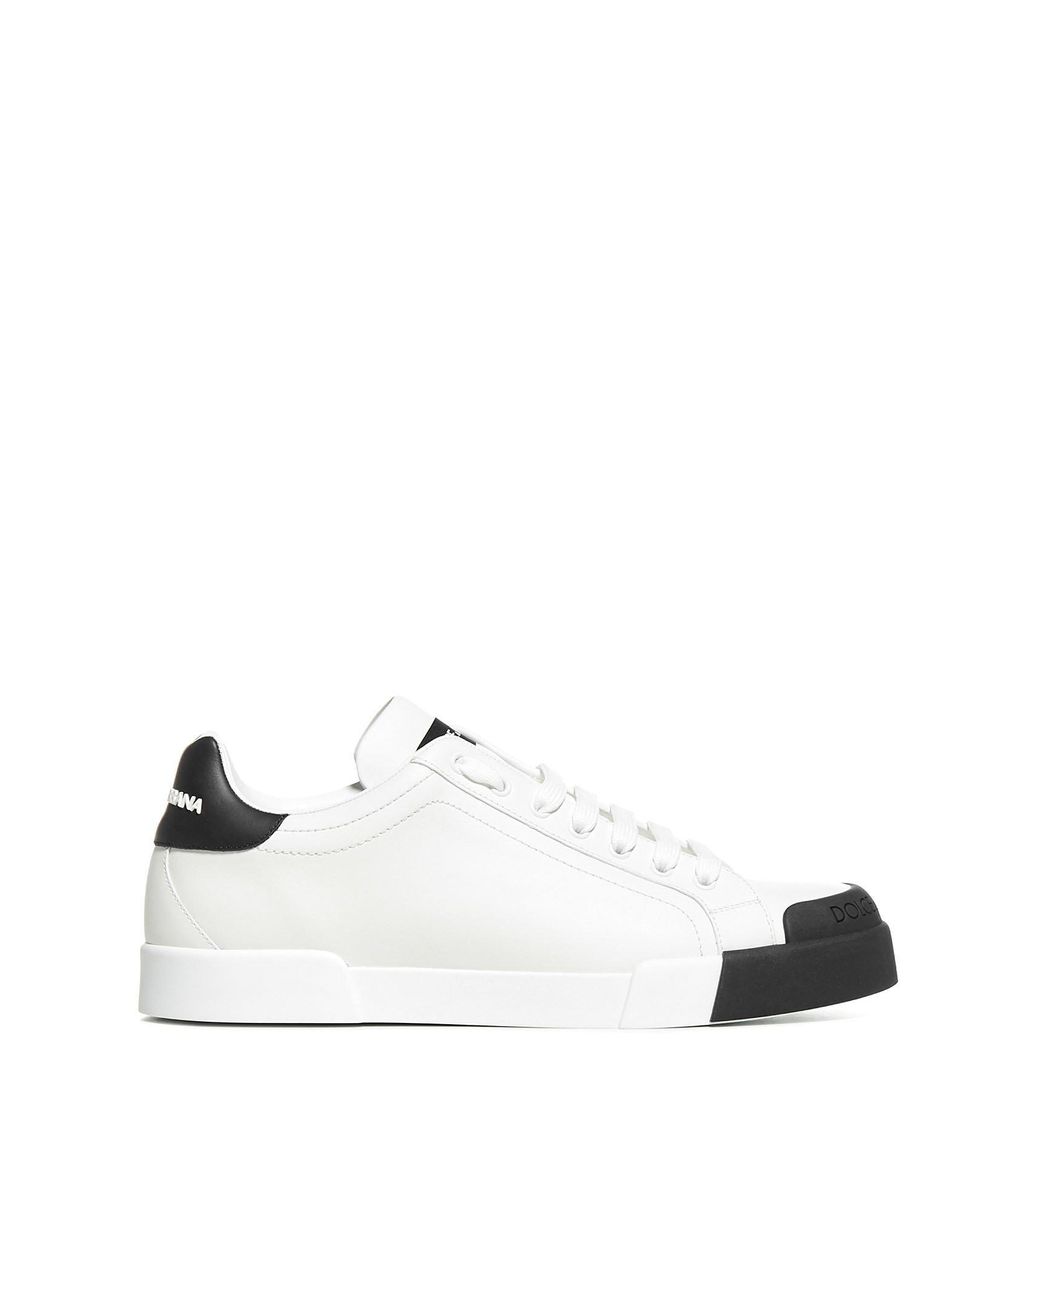 Dolce & Gabbana Leather Portofino Low-top Sneakers in White for Men ...